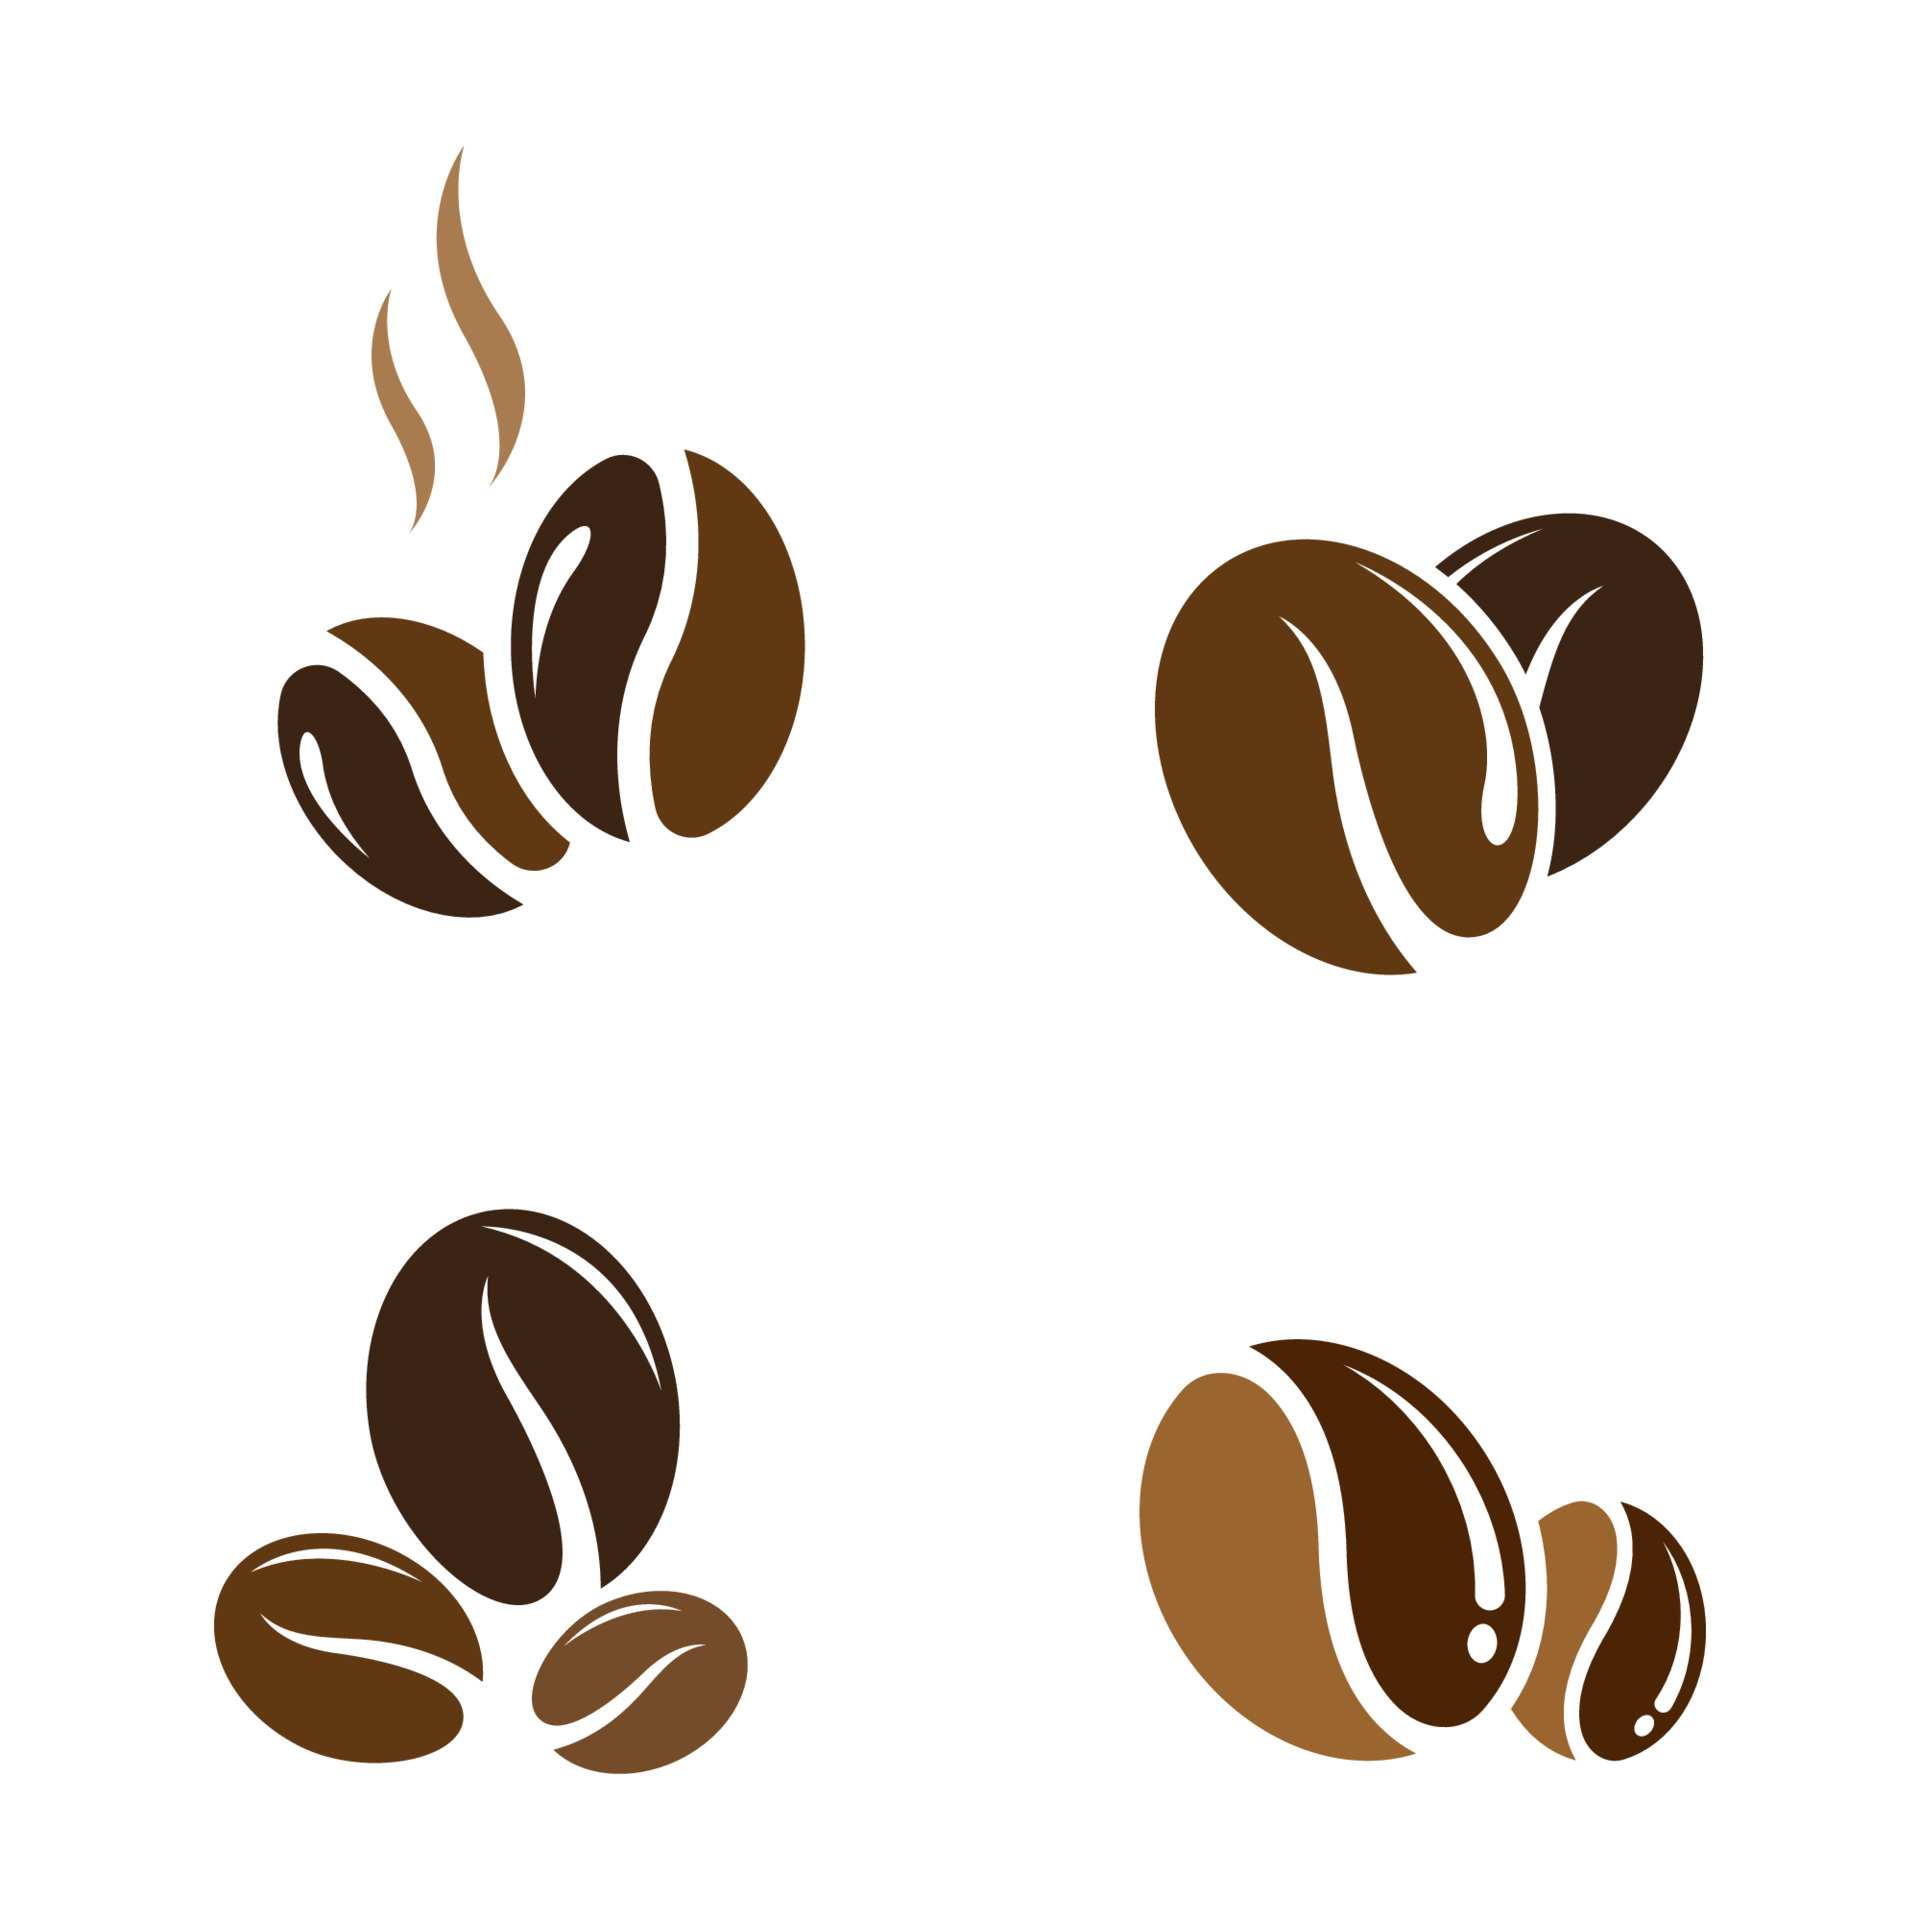 Coffee logo image illustration